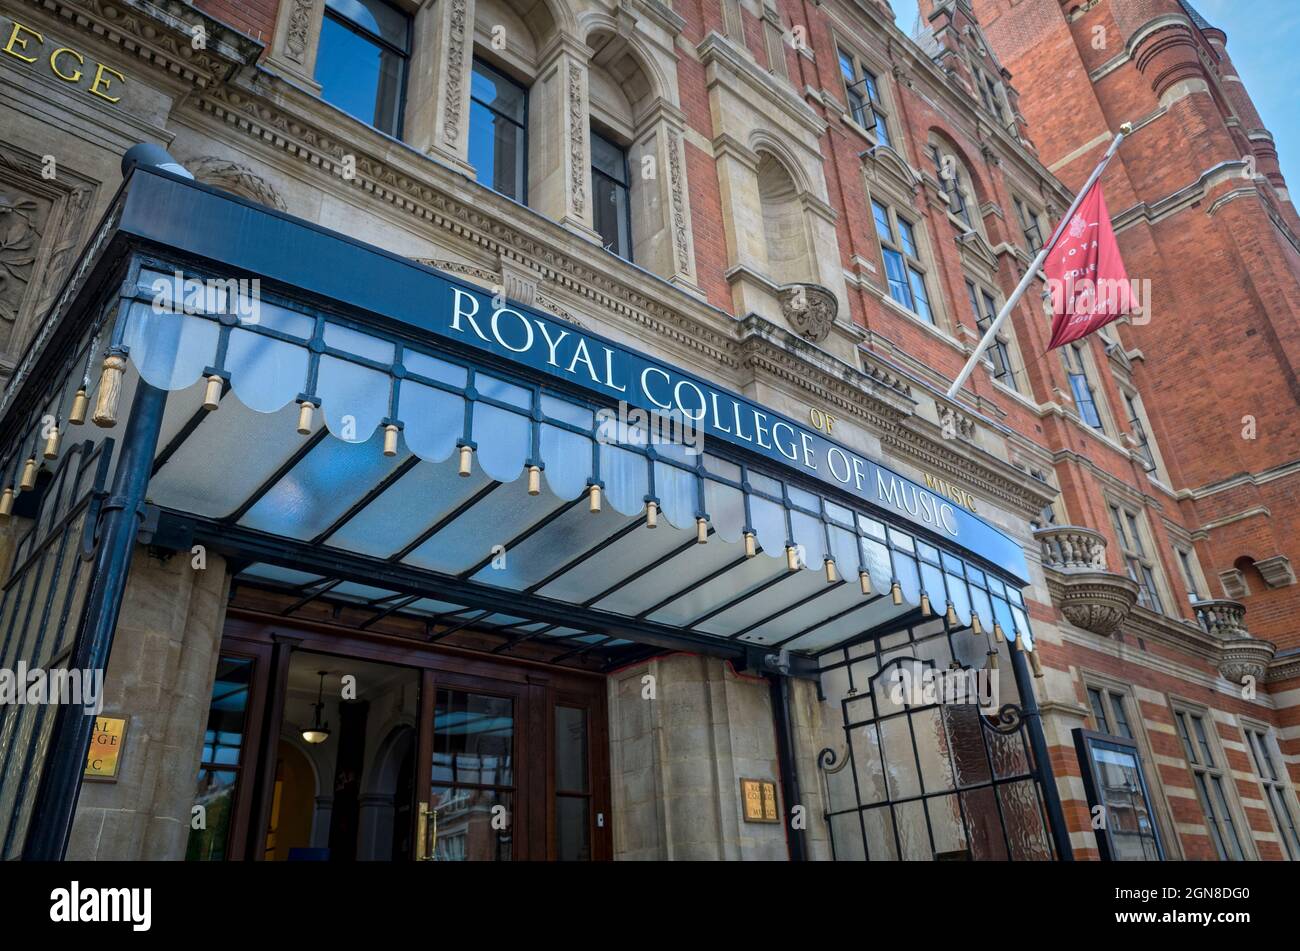 Royal College of Music, fundada en 1882, South Kensington, Londres, Inglaterra Foto de stock